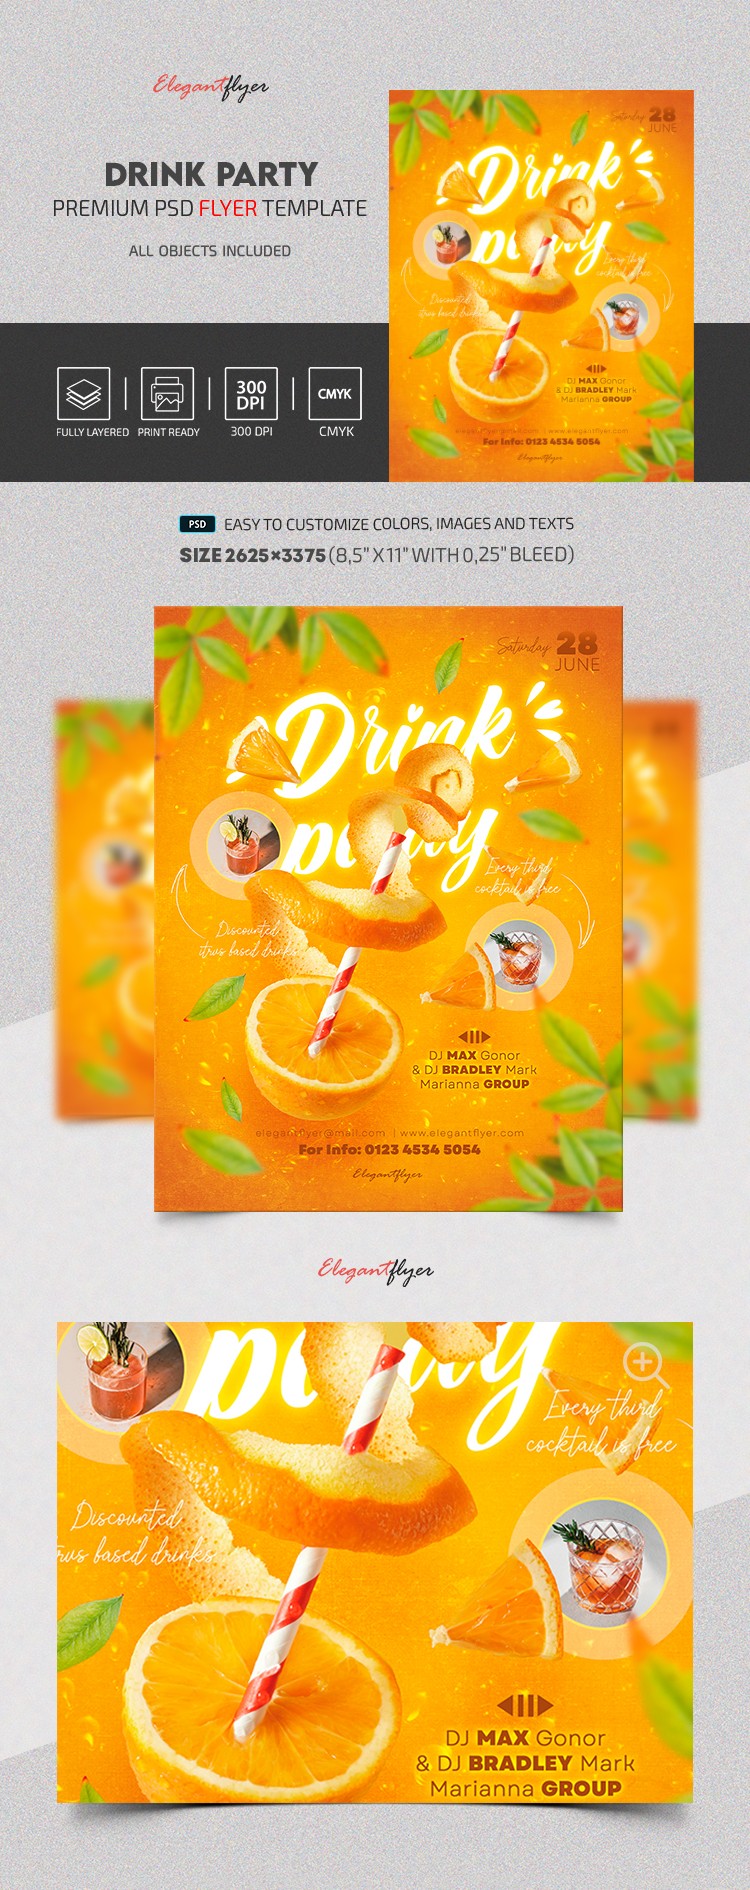 Drink Party Flyer by ElegantFlyer